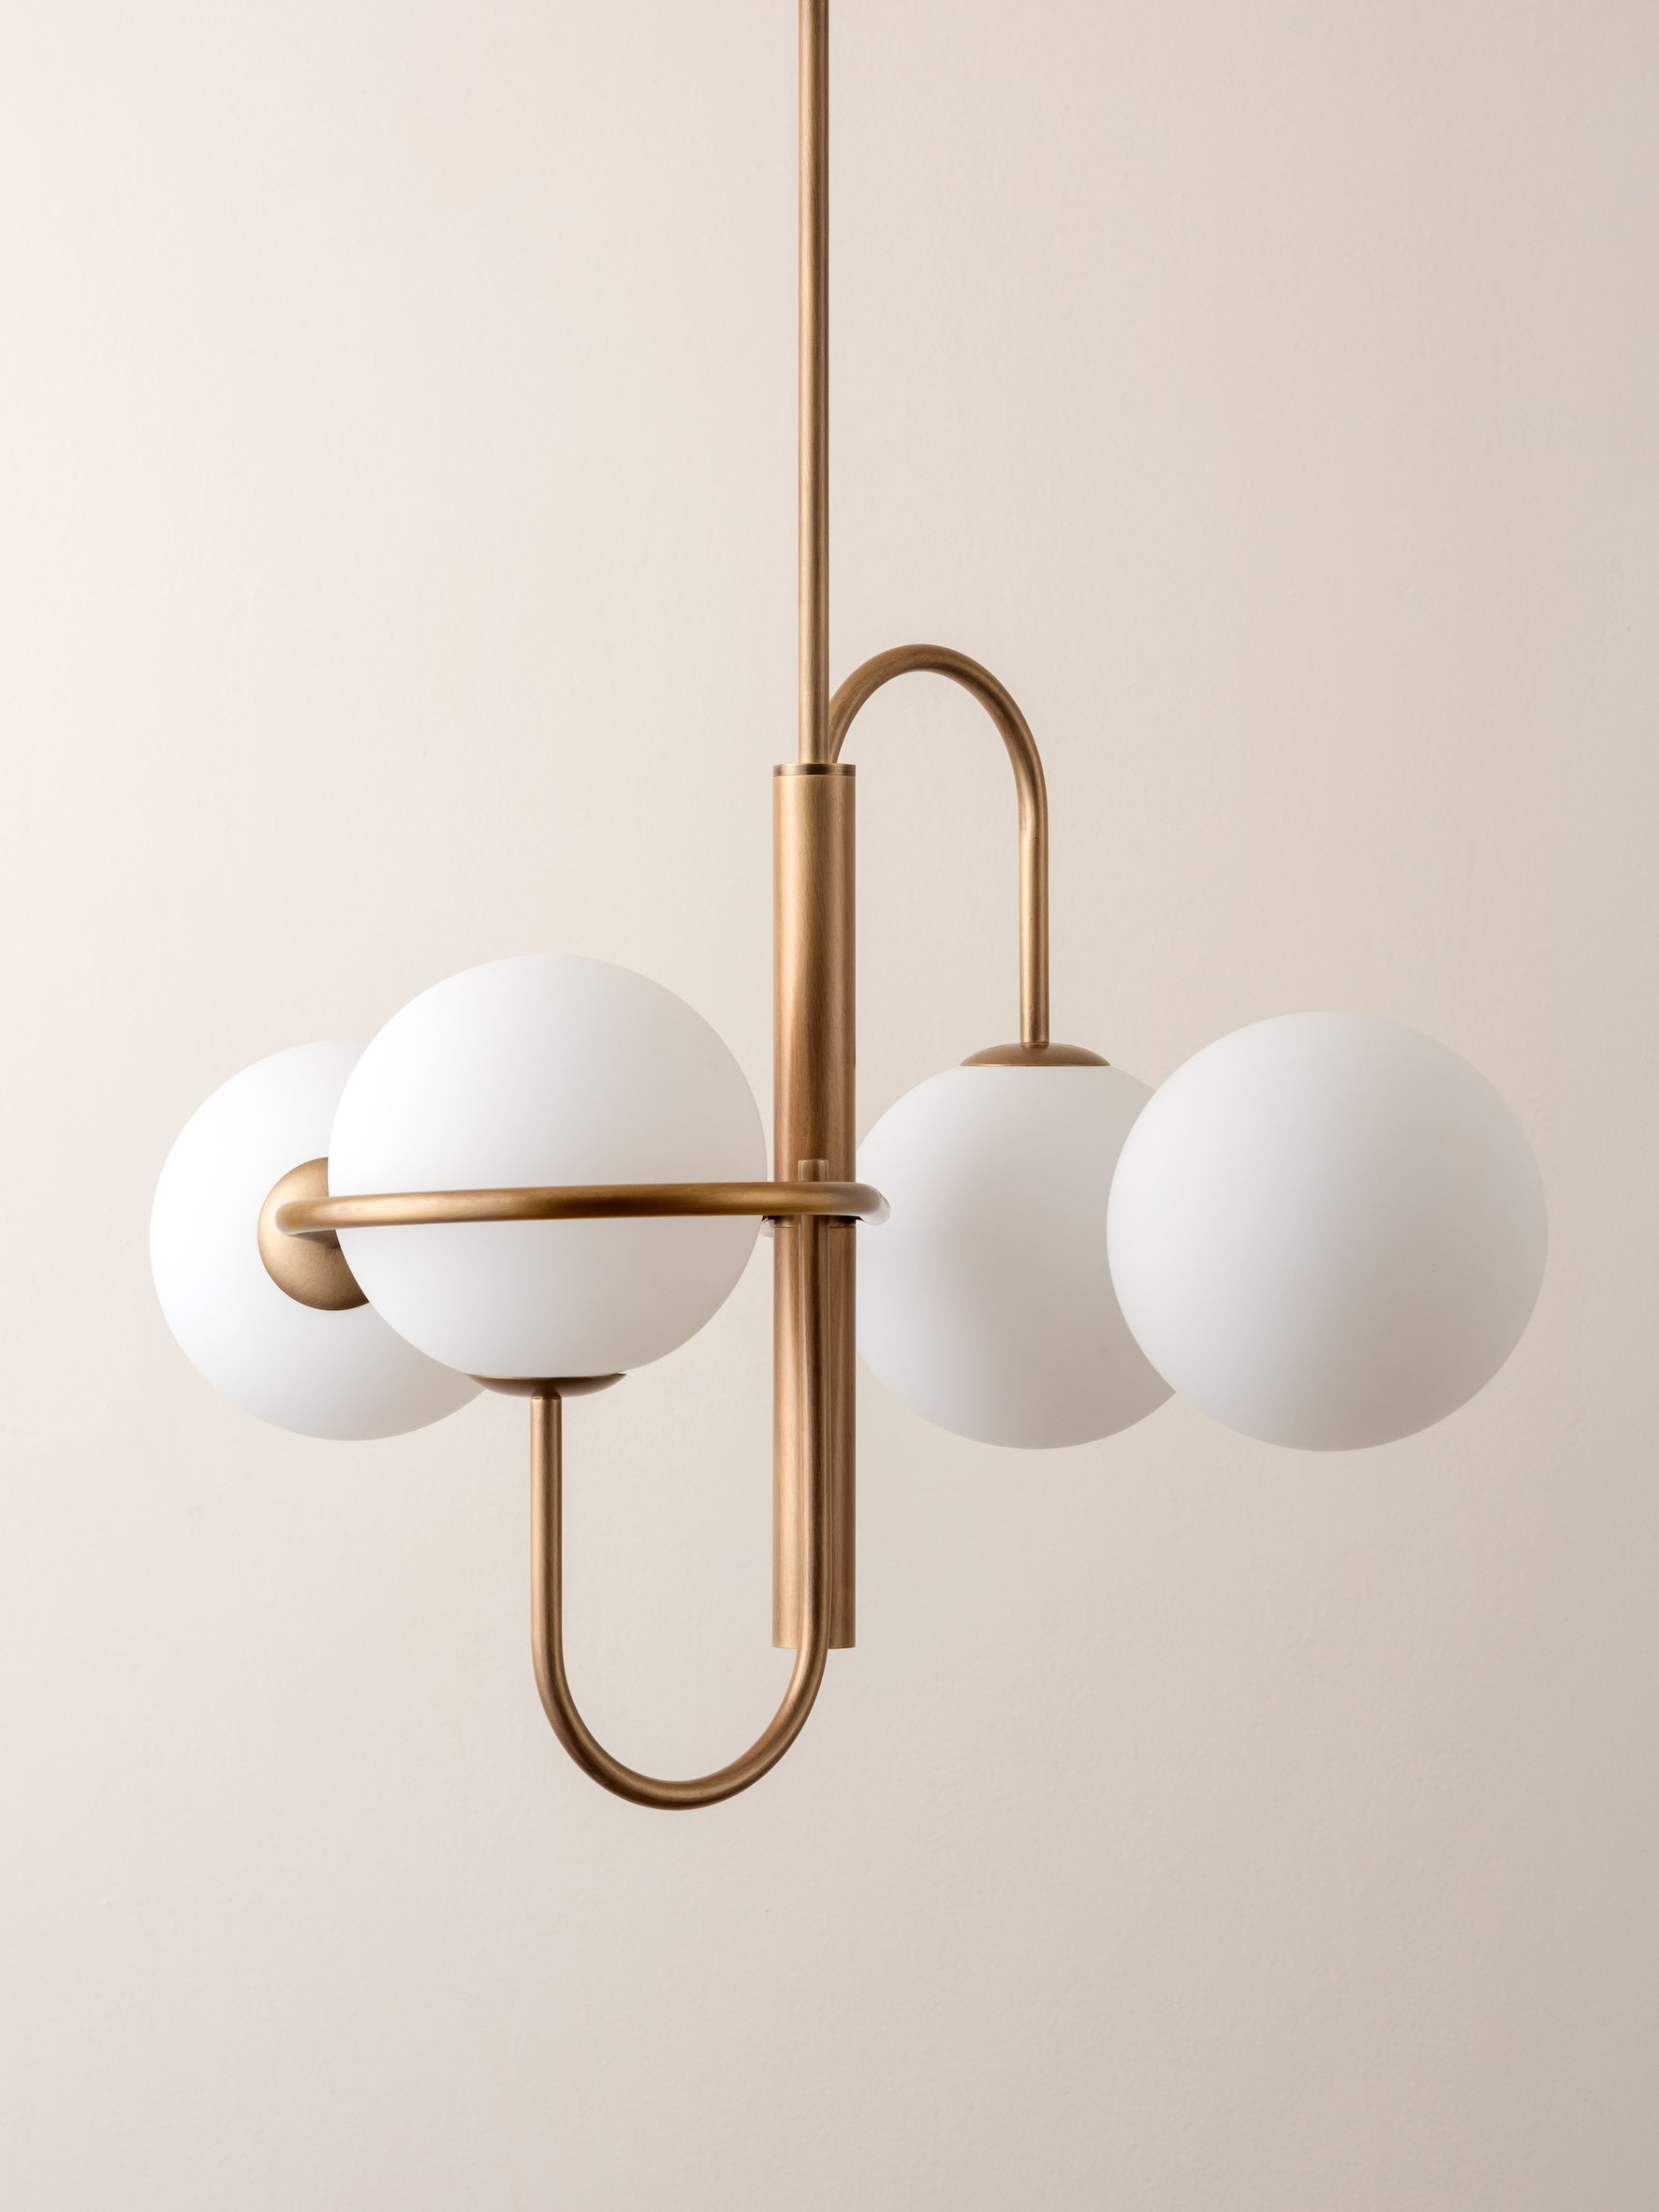 Decora - 4 light aged brass and opal pendant | Ceiling Light | Lights & Lamps | UK | Modern Affordable Designer Lighting